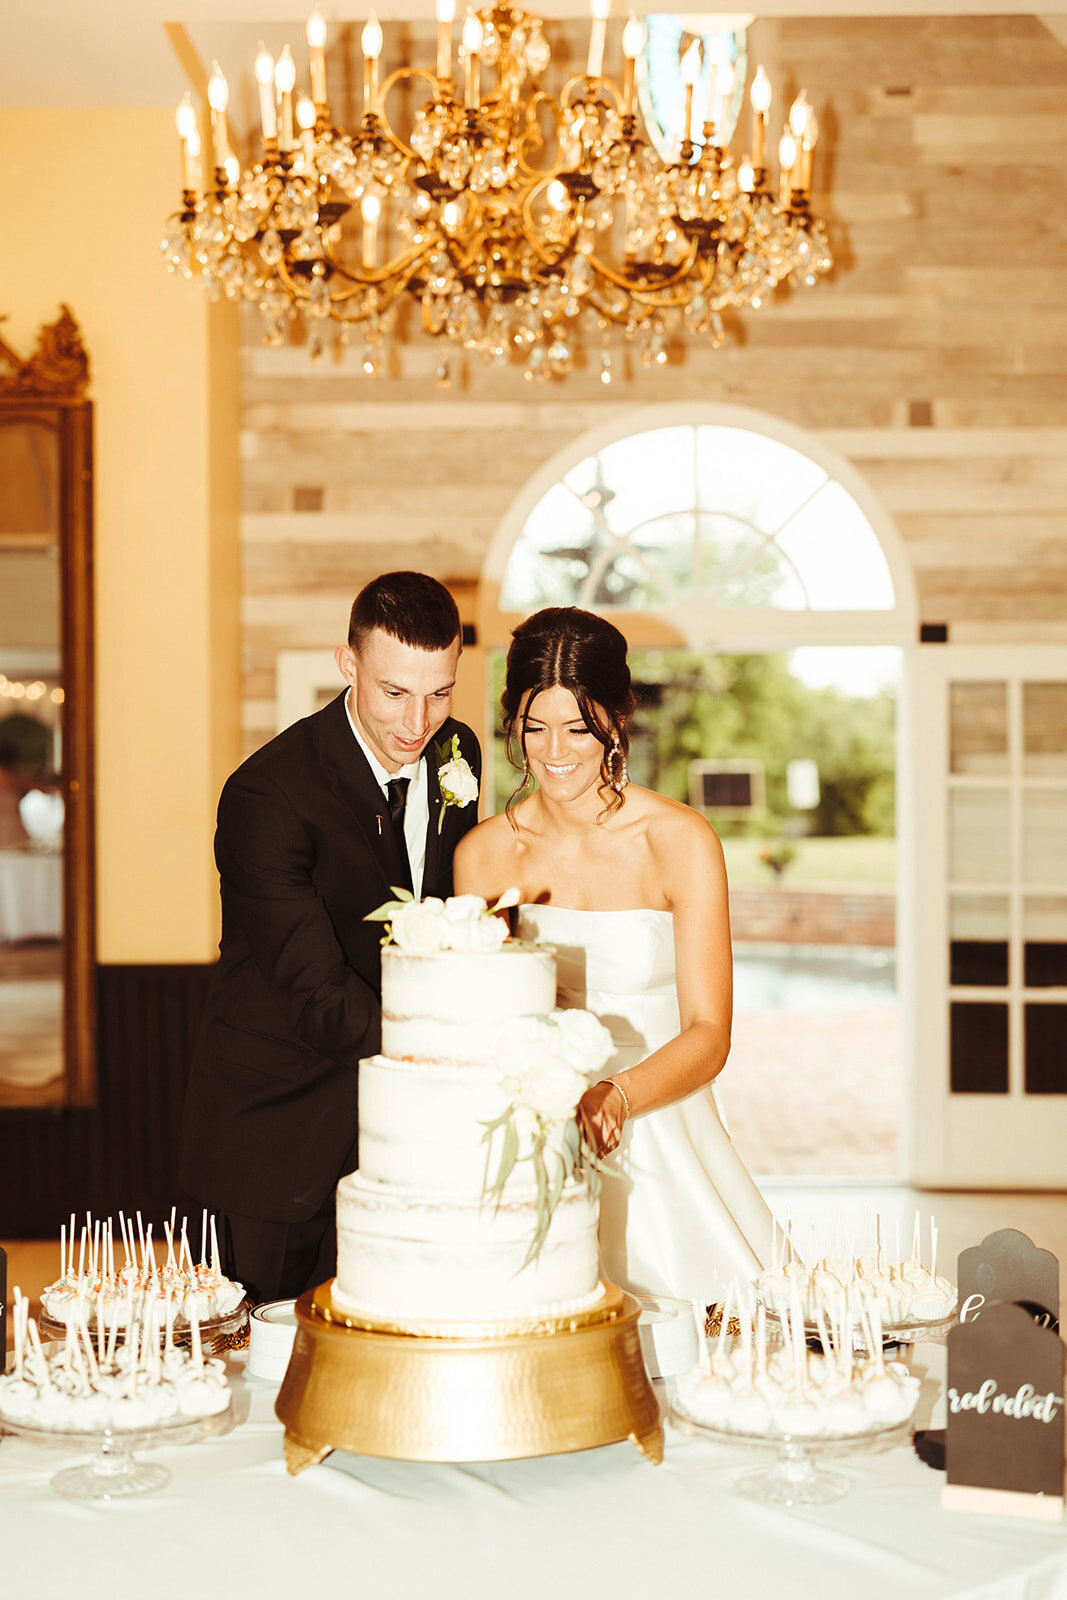 Lynwood Estate - Kentucky Wedding Venue - Morgan Andreoni Photography 15